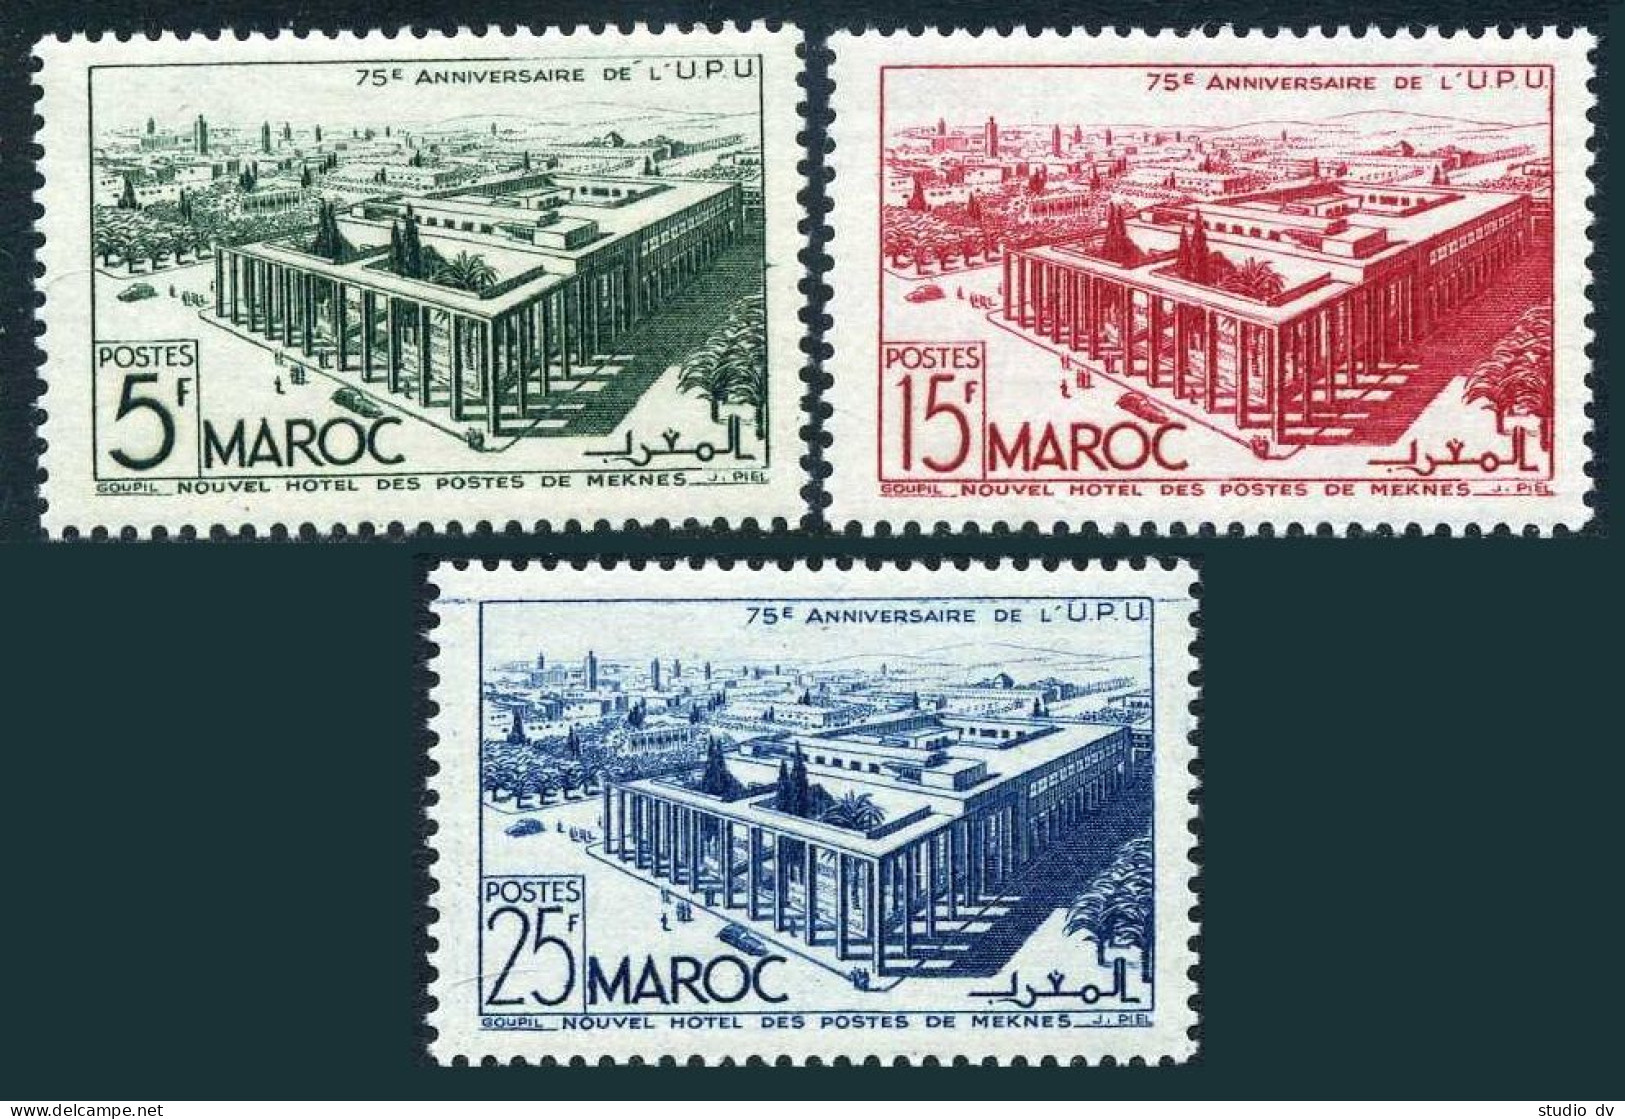 Fr Morocco 256-258, MNH. Michel 293-295. UPU-75, 1949. Postal Building, Meknes. - Morocco (1956-...)